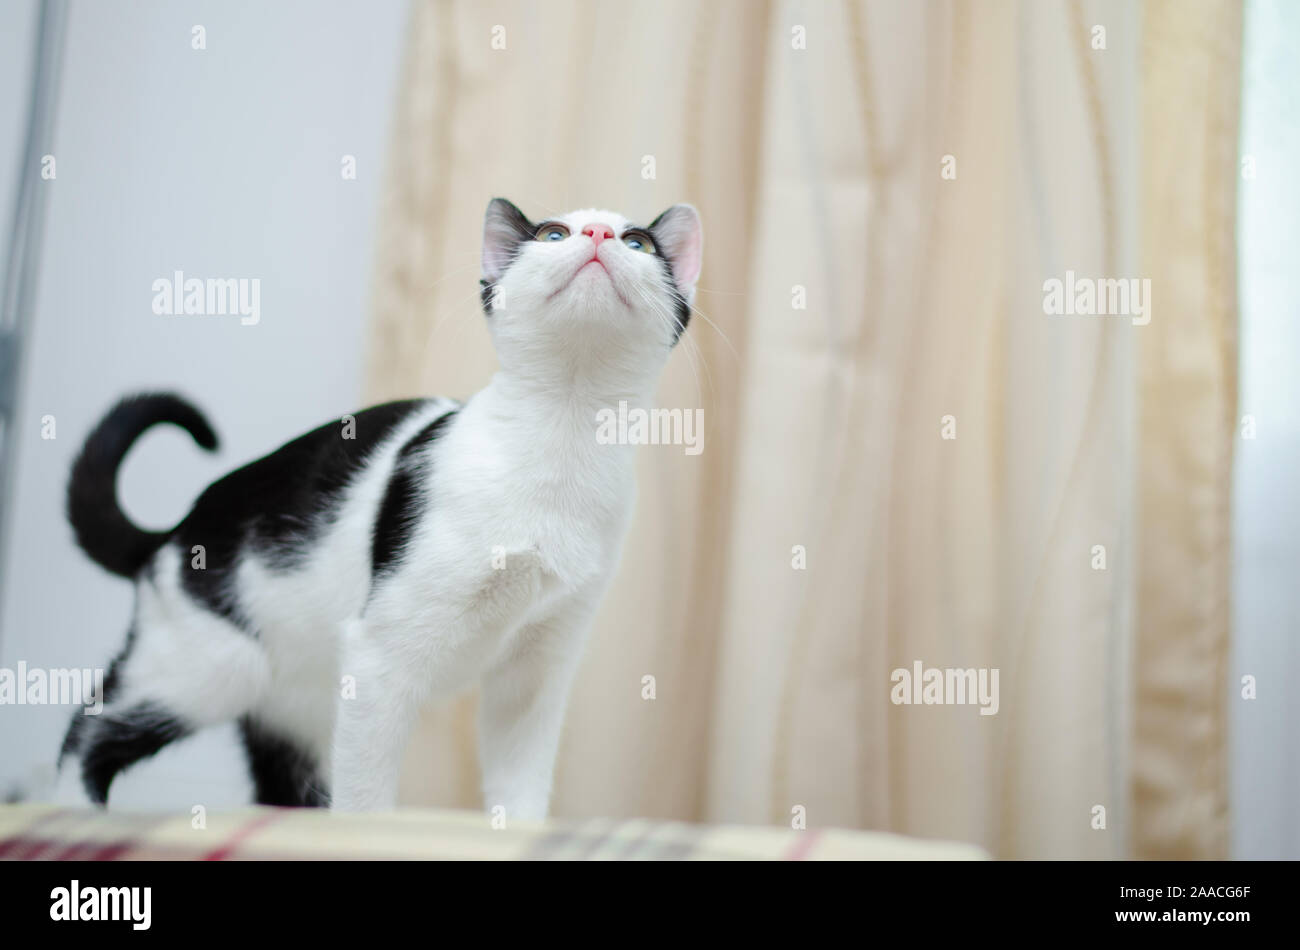 Perfect cat posing Stock Photo